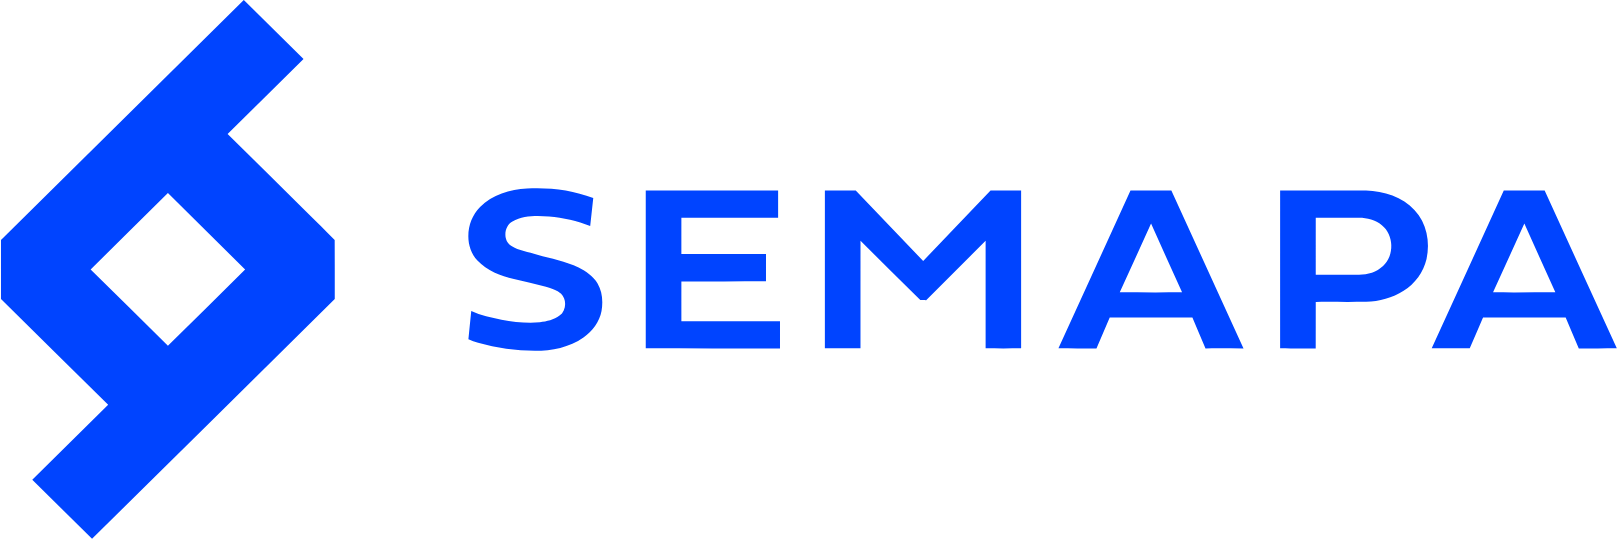 Semapa logo large (transparent PNG)